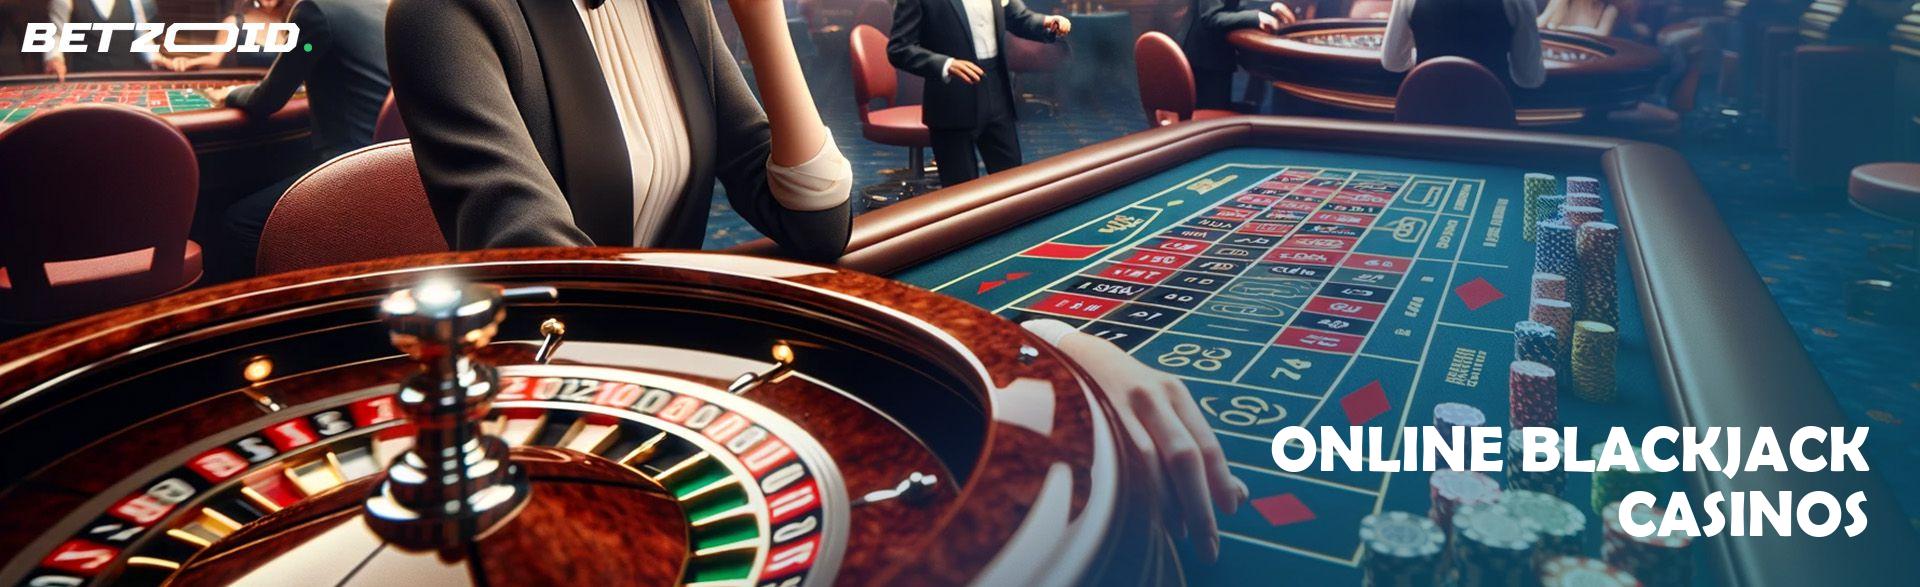 Online Blackjack Casinos.